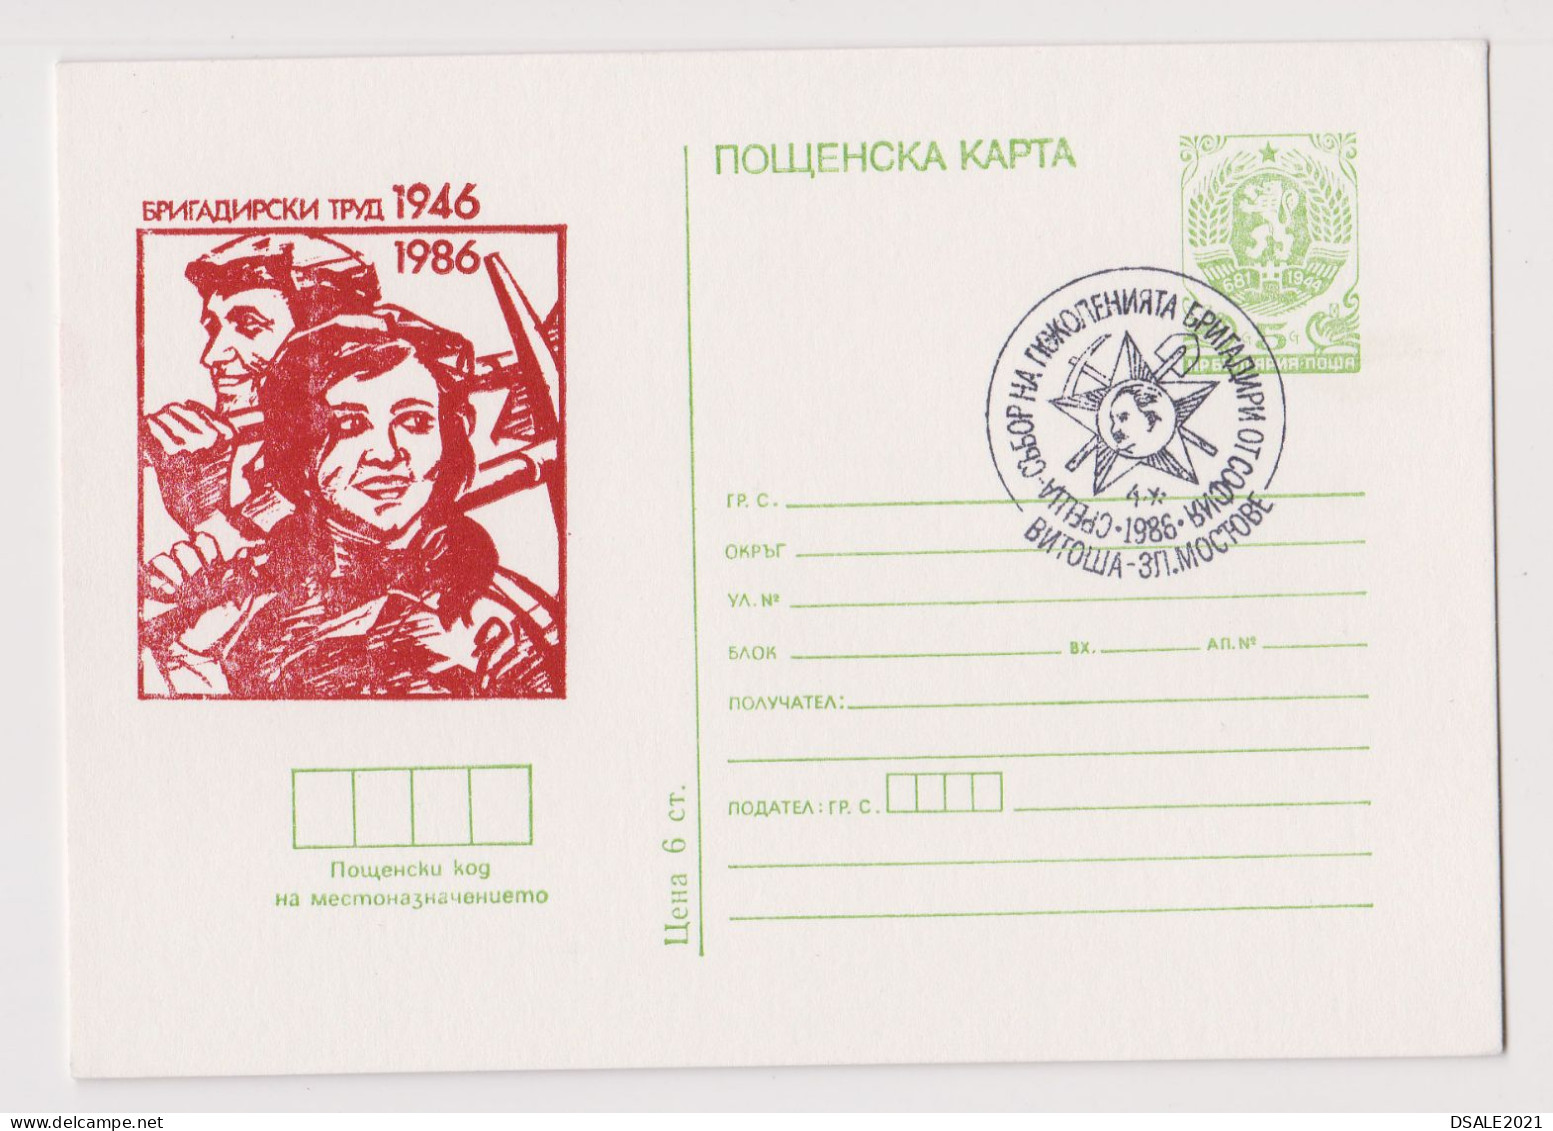 Bulgaria Bulgarie Bulgarien 1986 Postal Stationery Card, Ganzsachen, Entier, 1946 Bulgarian Youth Brigade Movement 67498 - Cartoline Postali